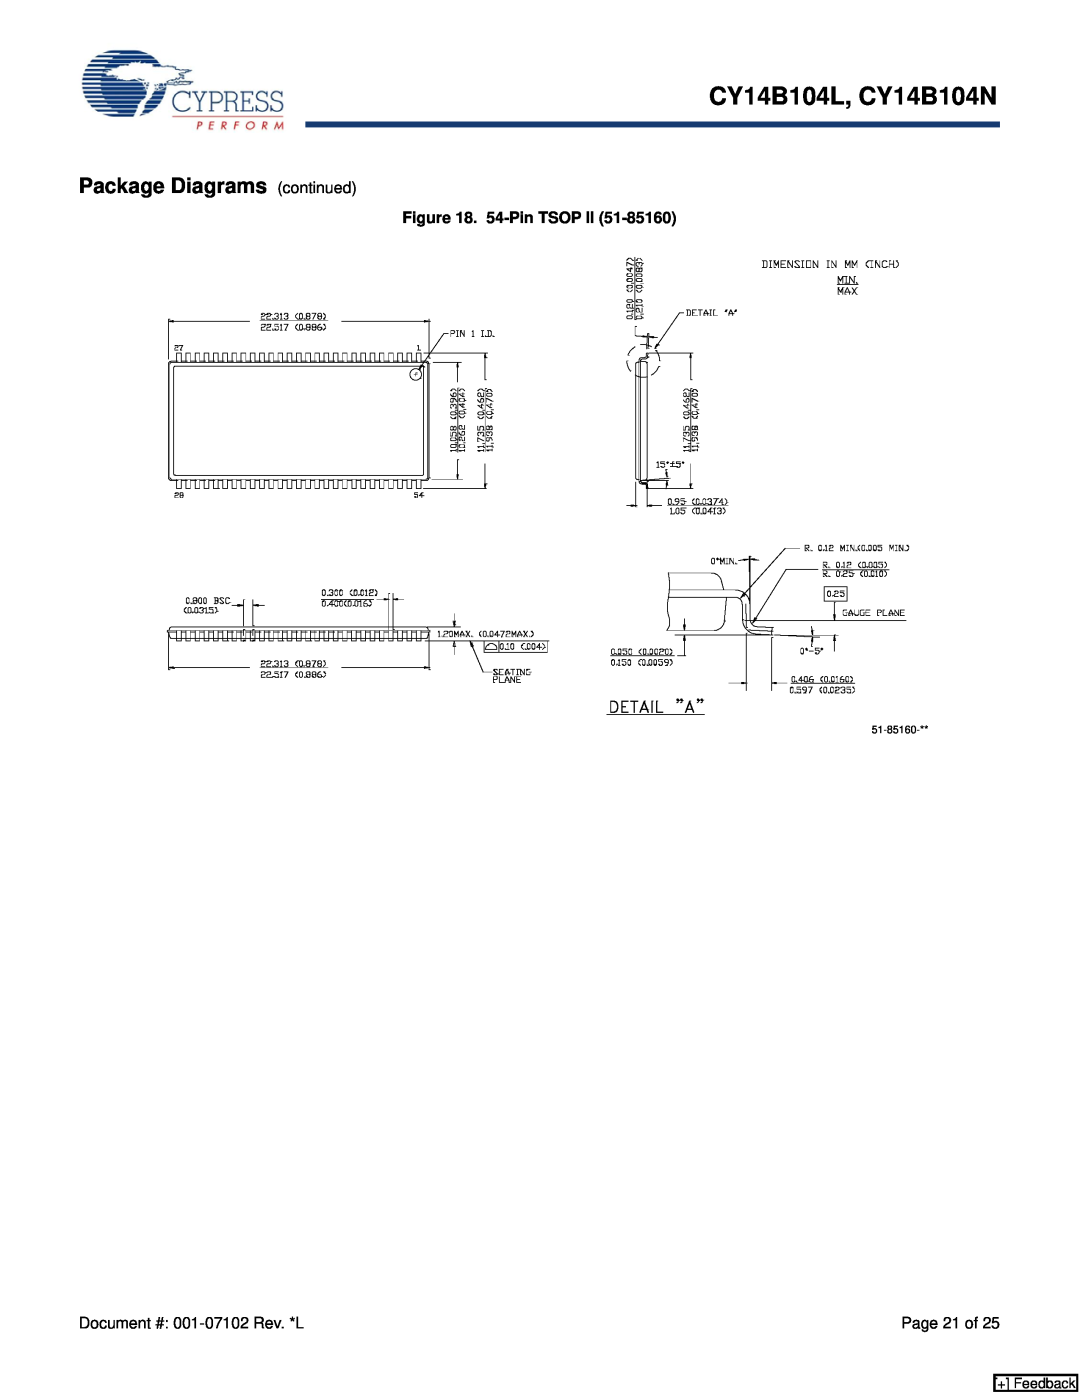 Cypress manual 54-Pin TSOP II, CY14B104L, CY14B104N, Package Diagrams continued, Page 21 of, + Feedback 